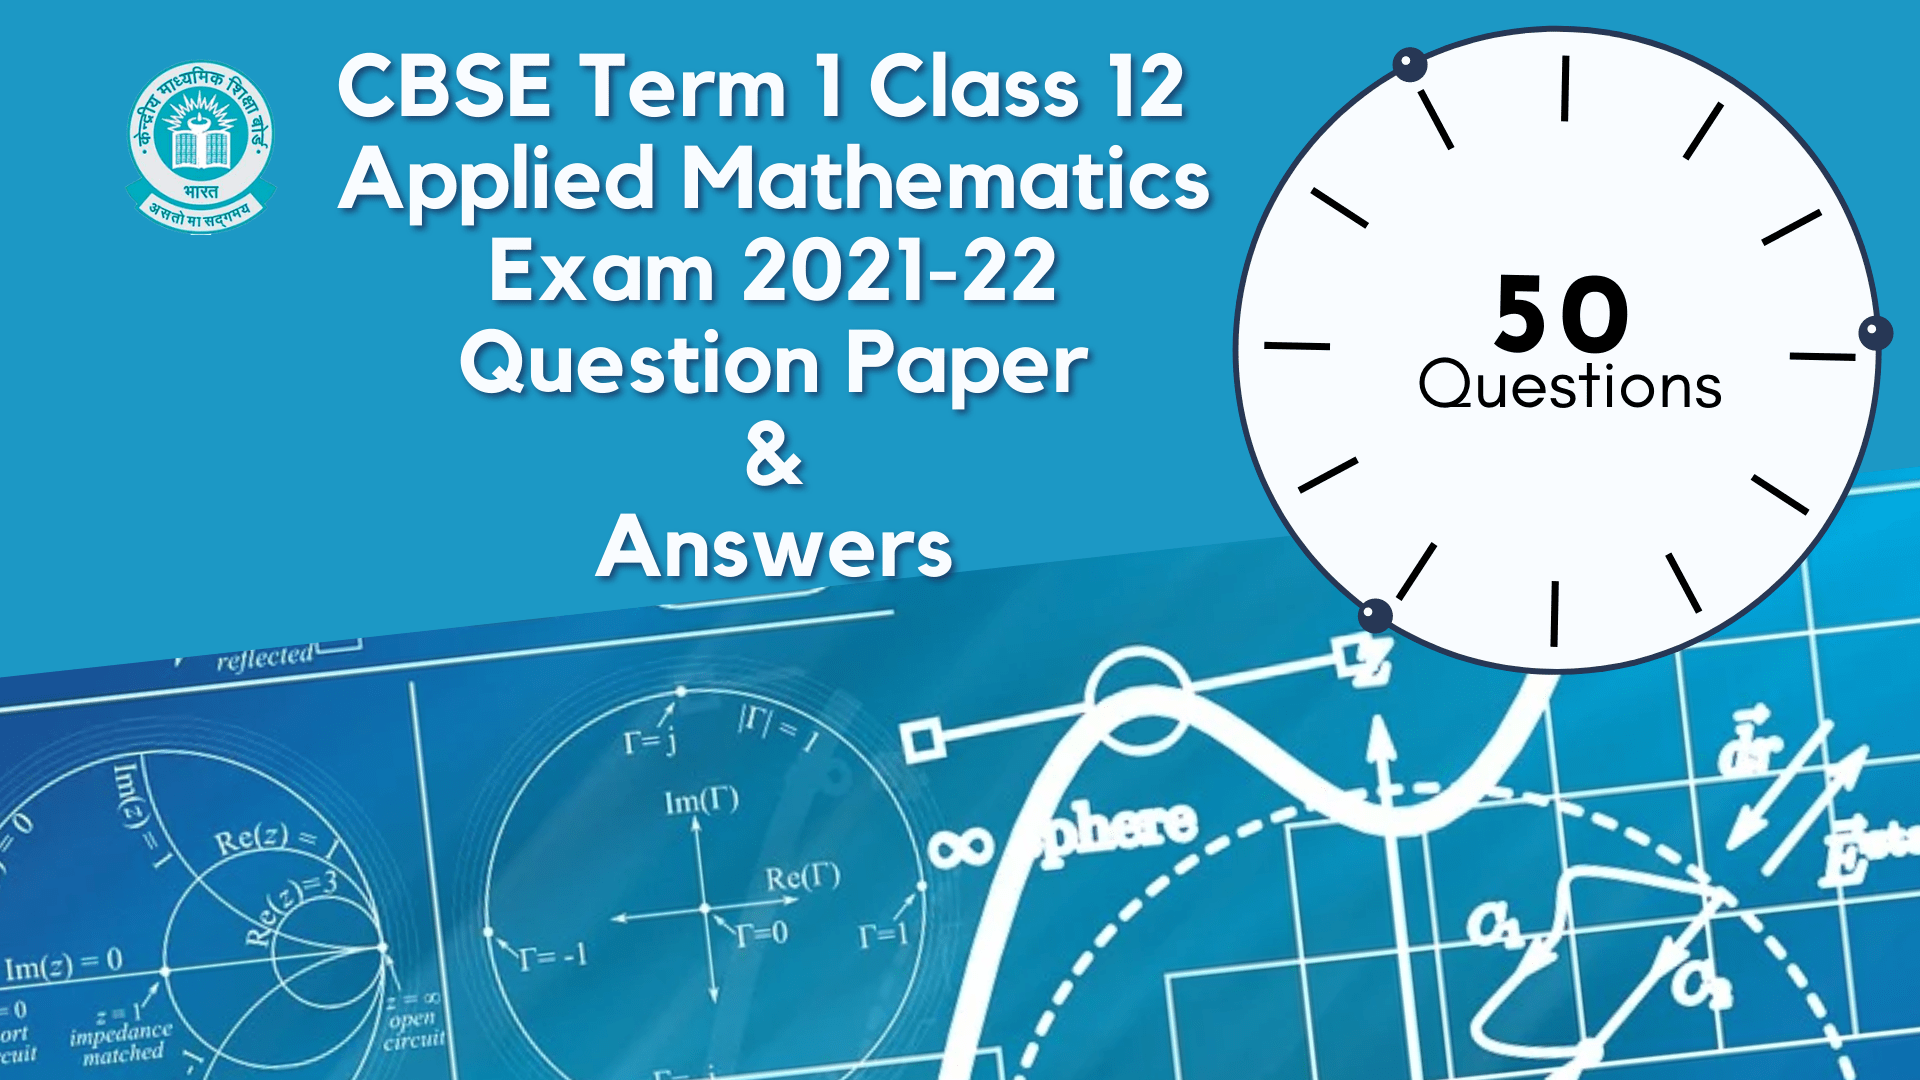 cbse-term-1-class-12-applied-mathematics-Exam-2021-22-question-paper-and-answers-iqcliq.com